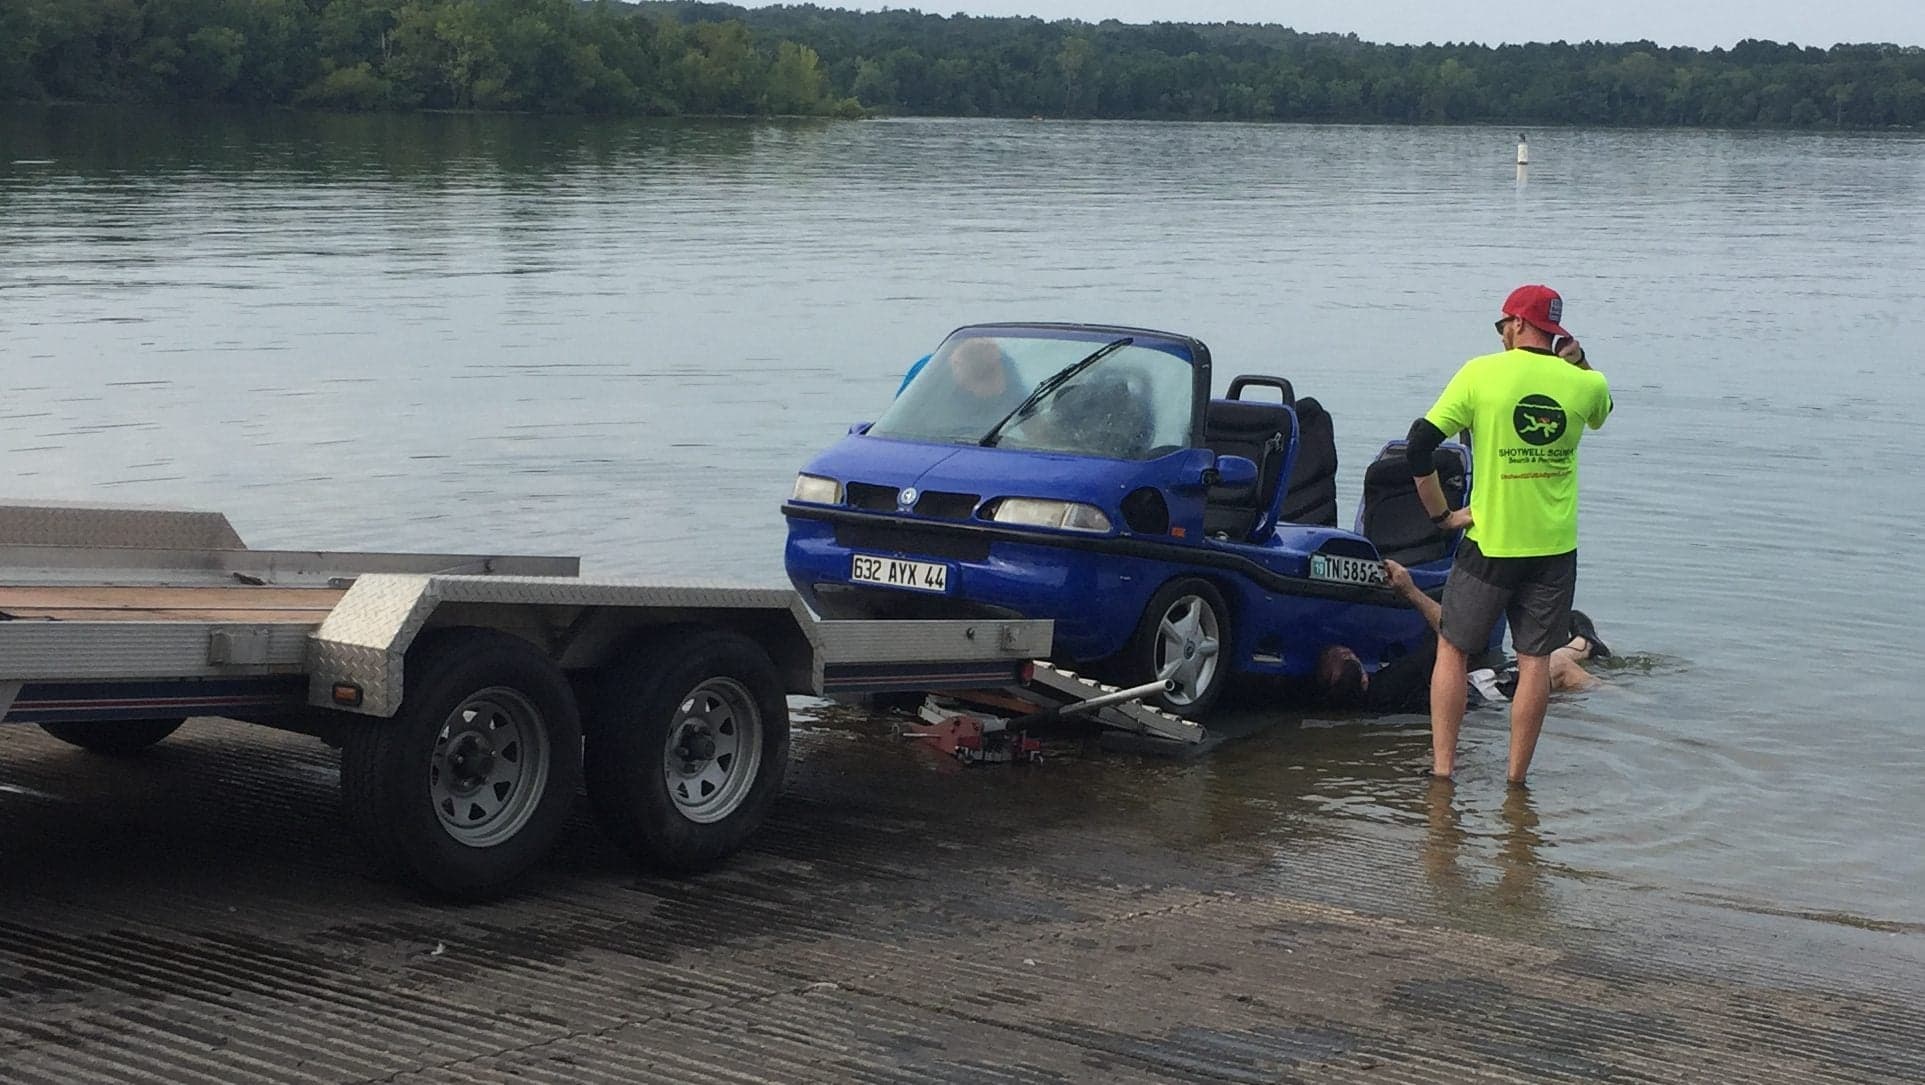 Lane Motor Museum Retrieves Sunken Amphibious Car from Tennessee Lake